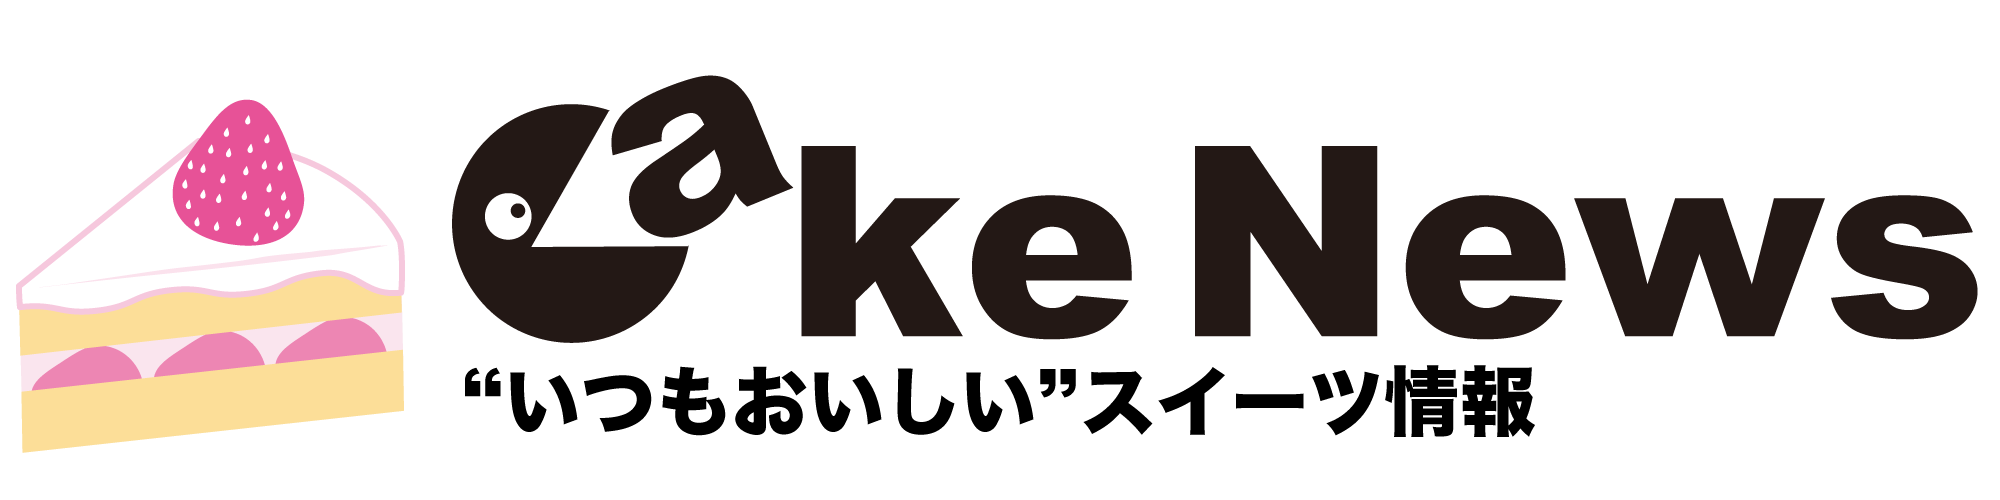 CakeNews-ケーキニュース-